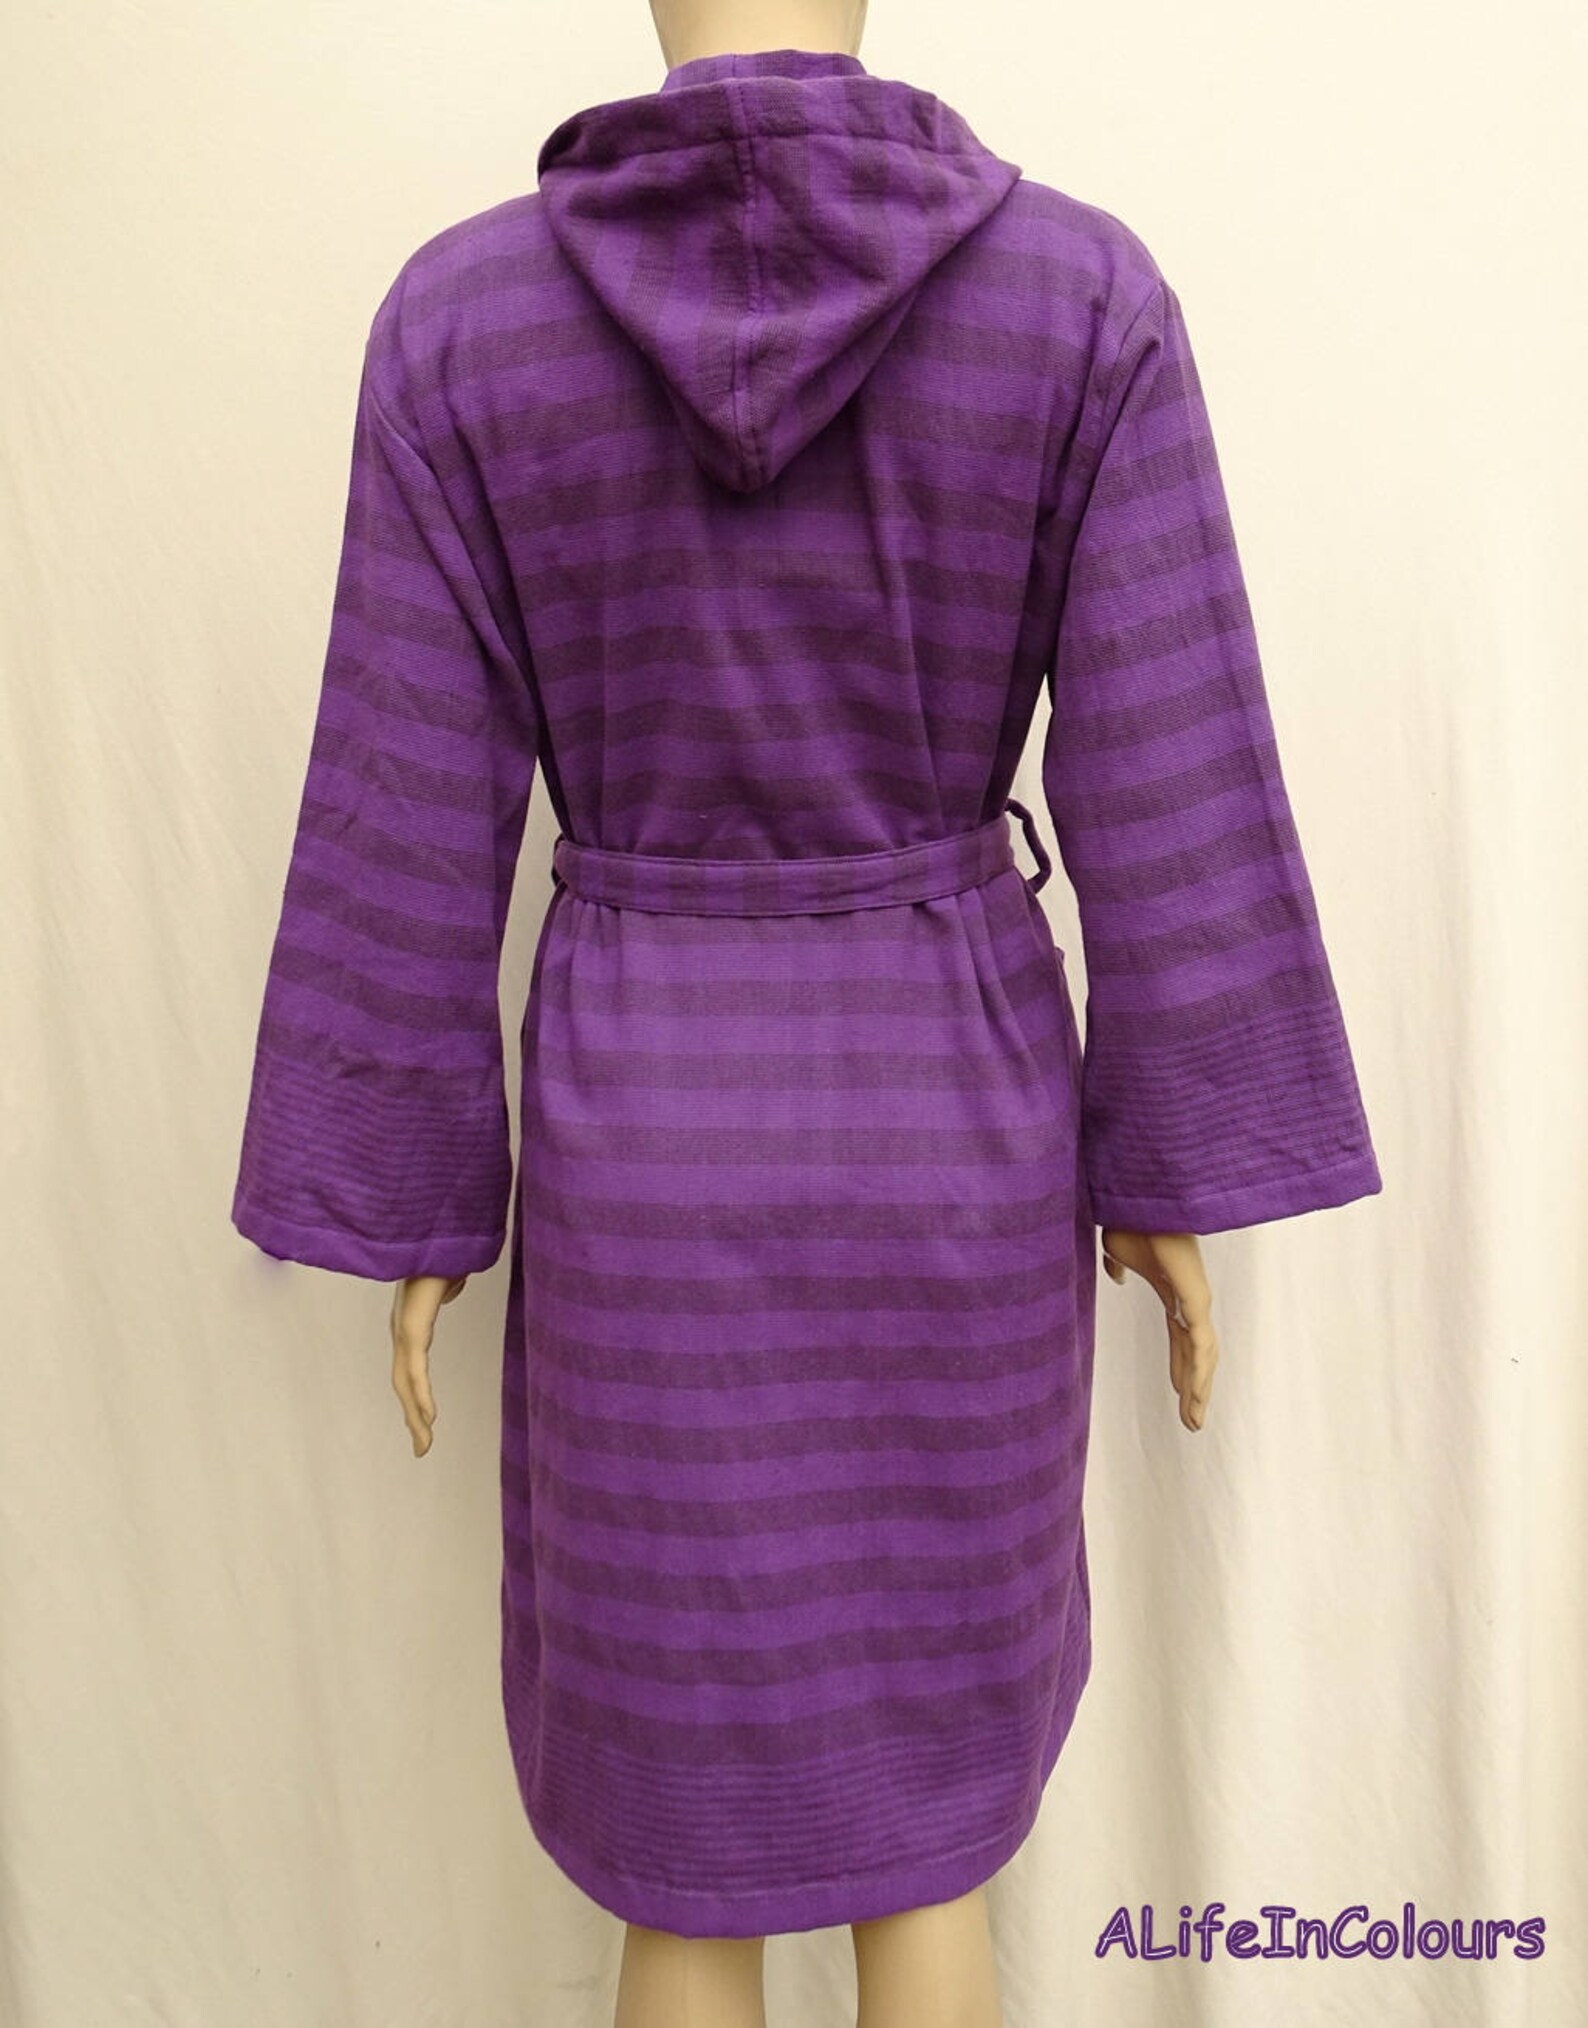 Women's purple colour Turkish terry cotton hooded warm | Etsy